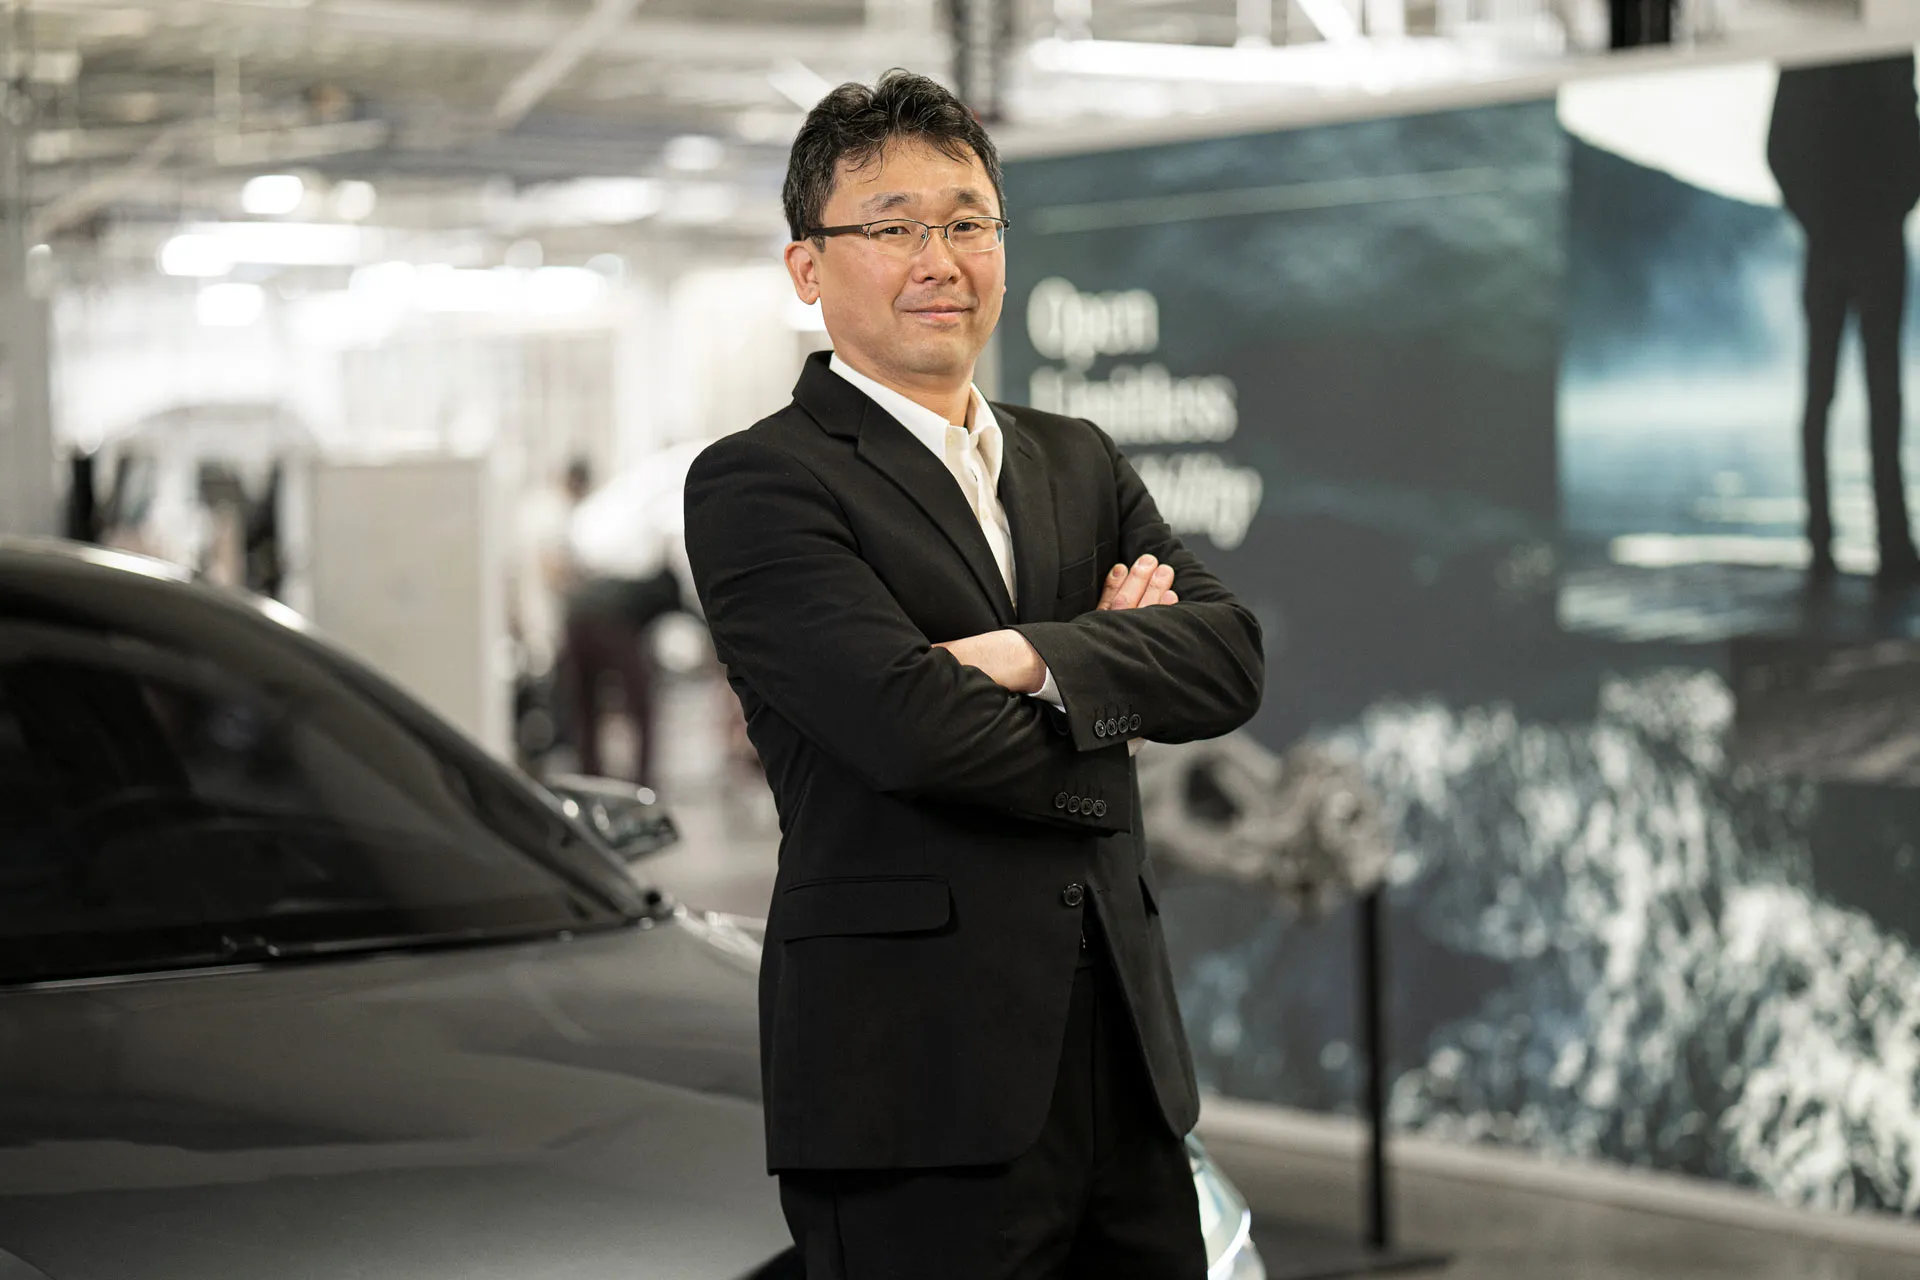 Eugene Lee, Director of ADAS and Autonomous Driving